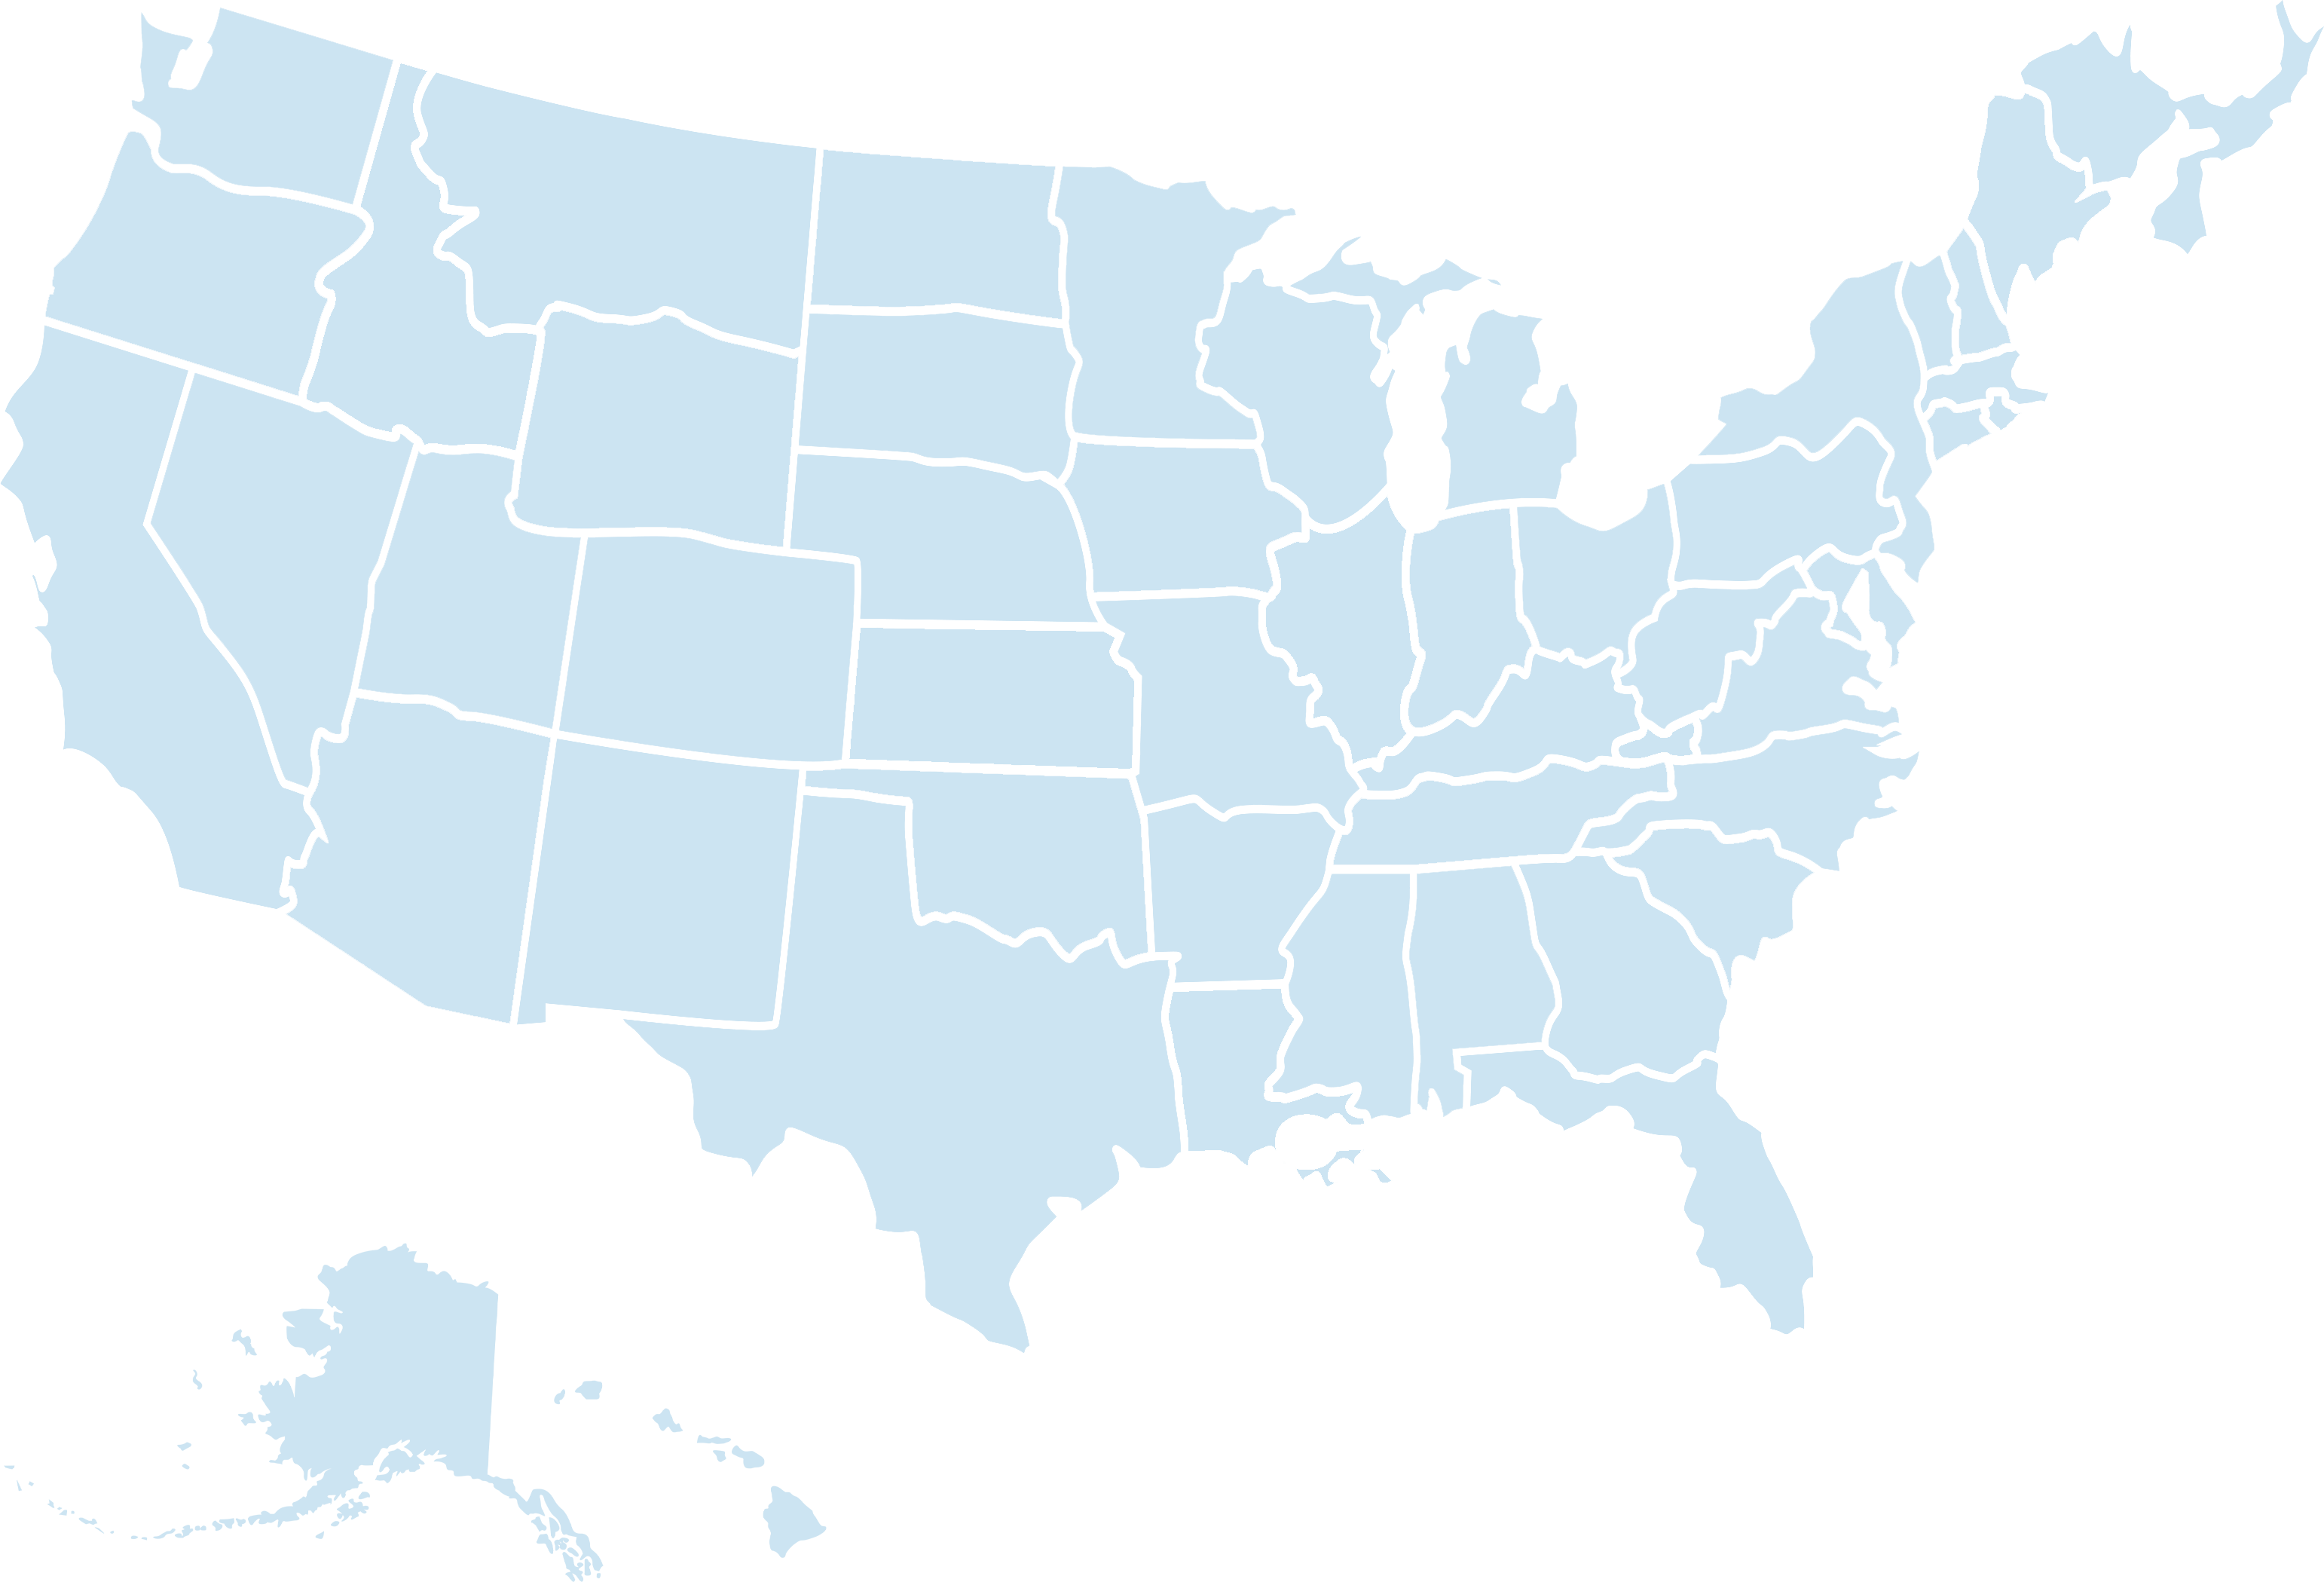 Reddyice map view